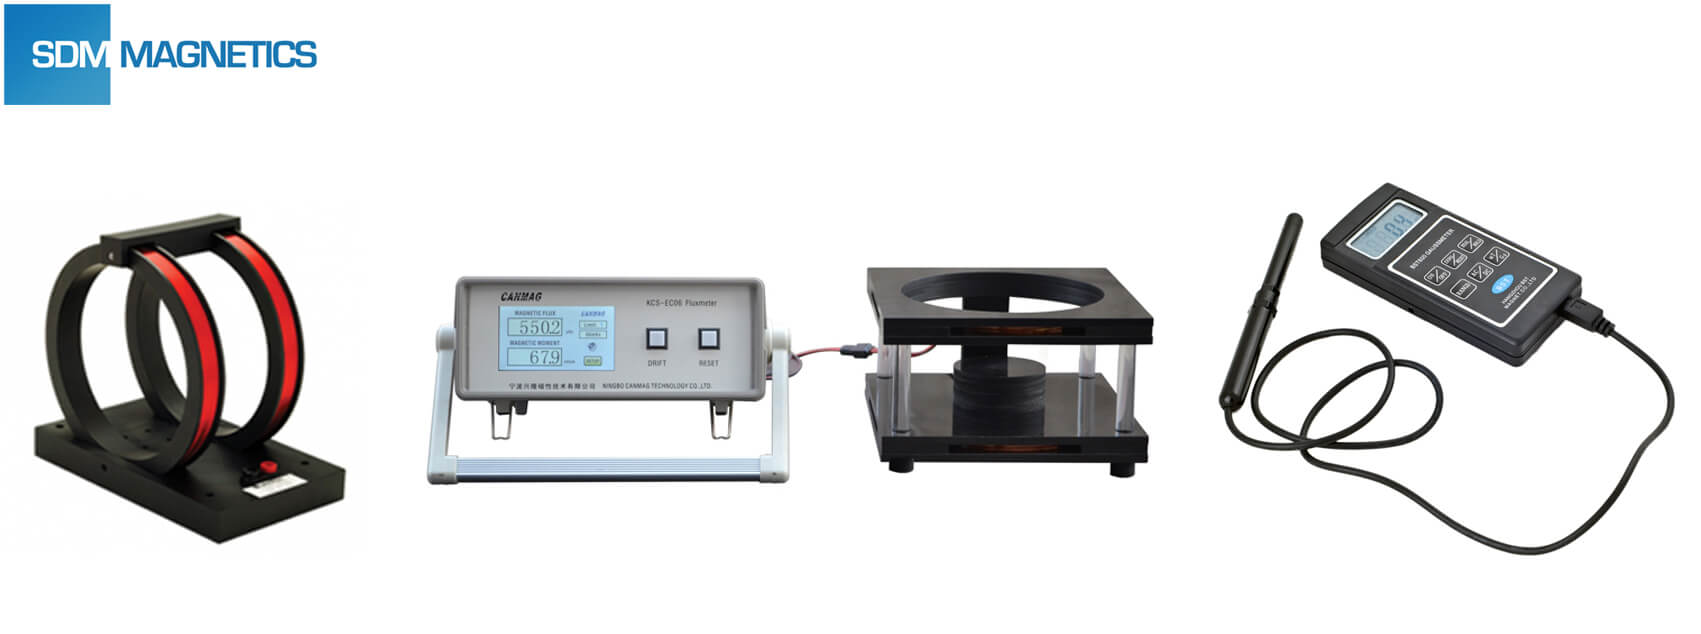 Electronic Balance Magnet Supplier - SDM Magnetics Co., Ltd.